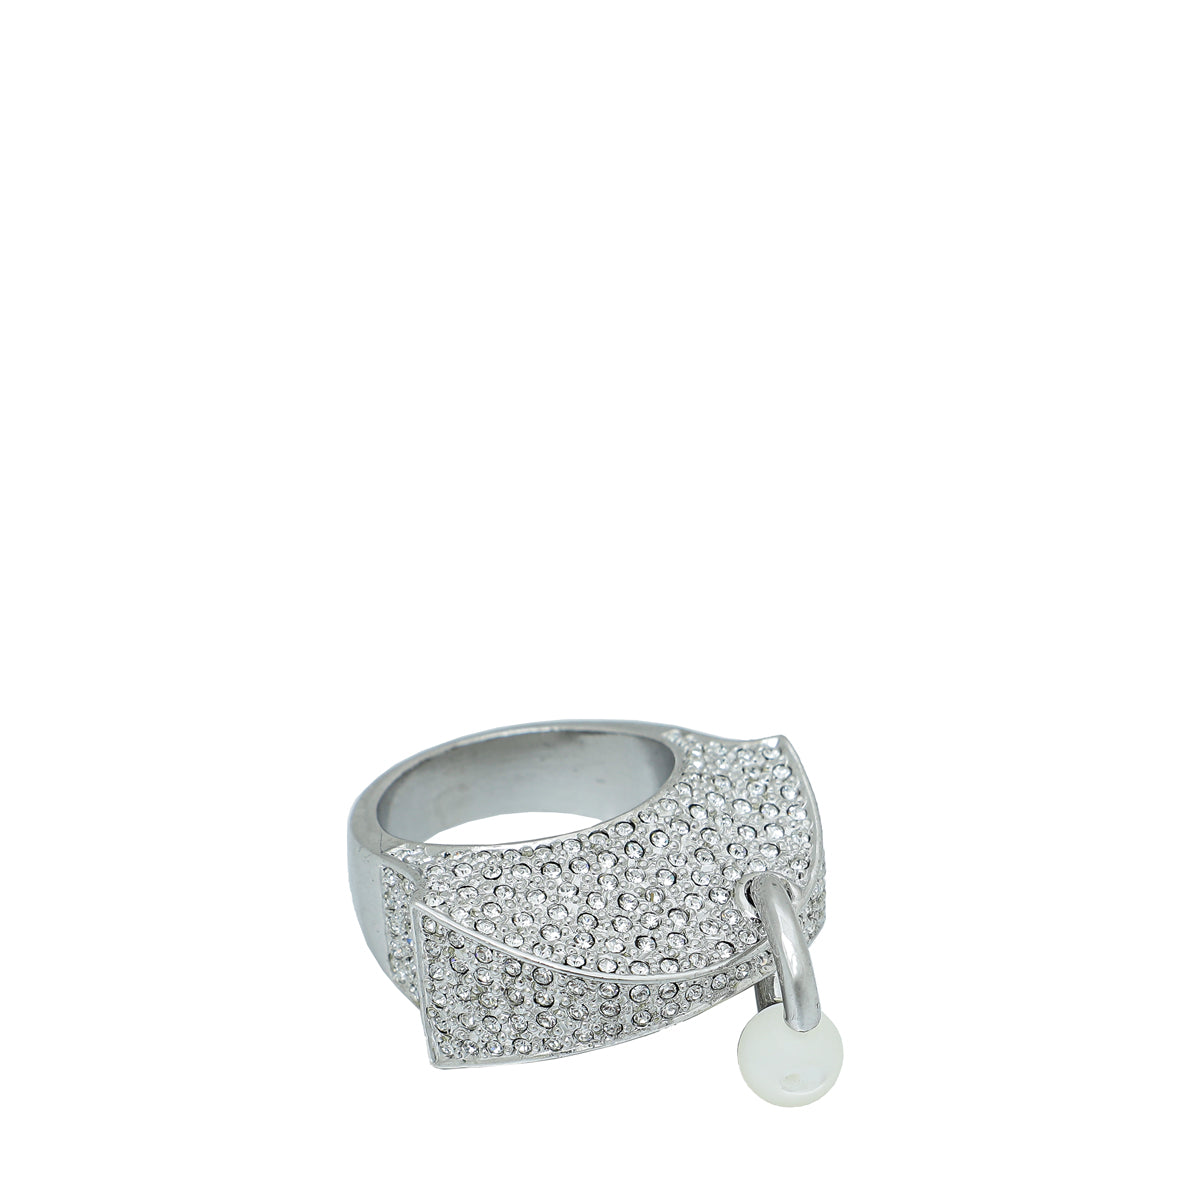 Christian Dior Silver Finish Crystal Ring